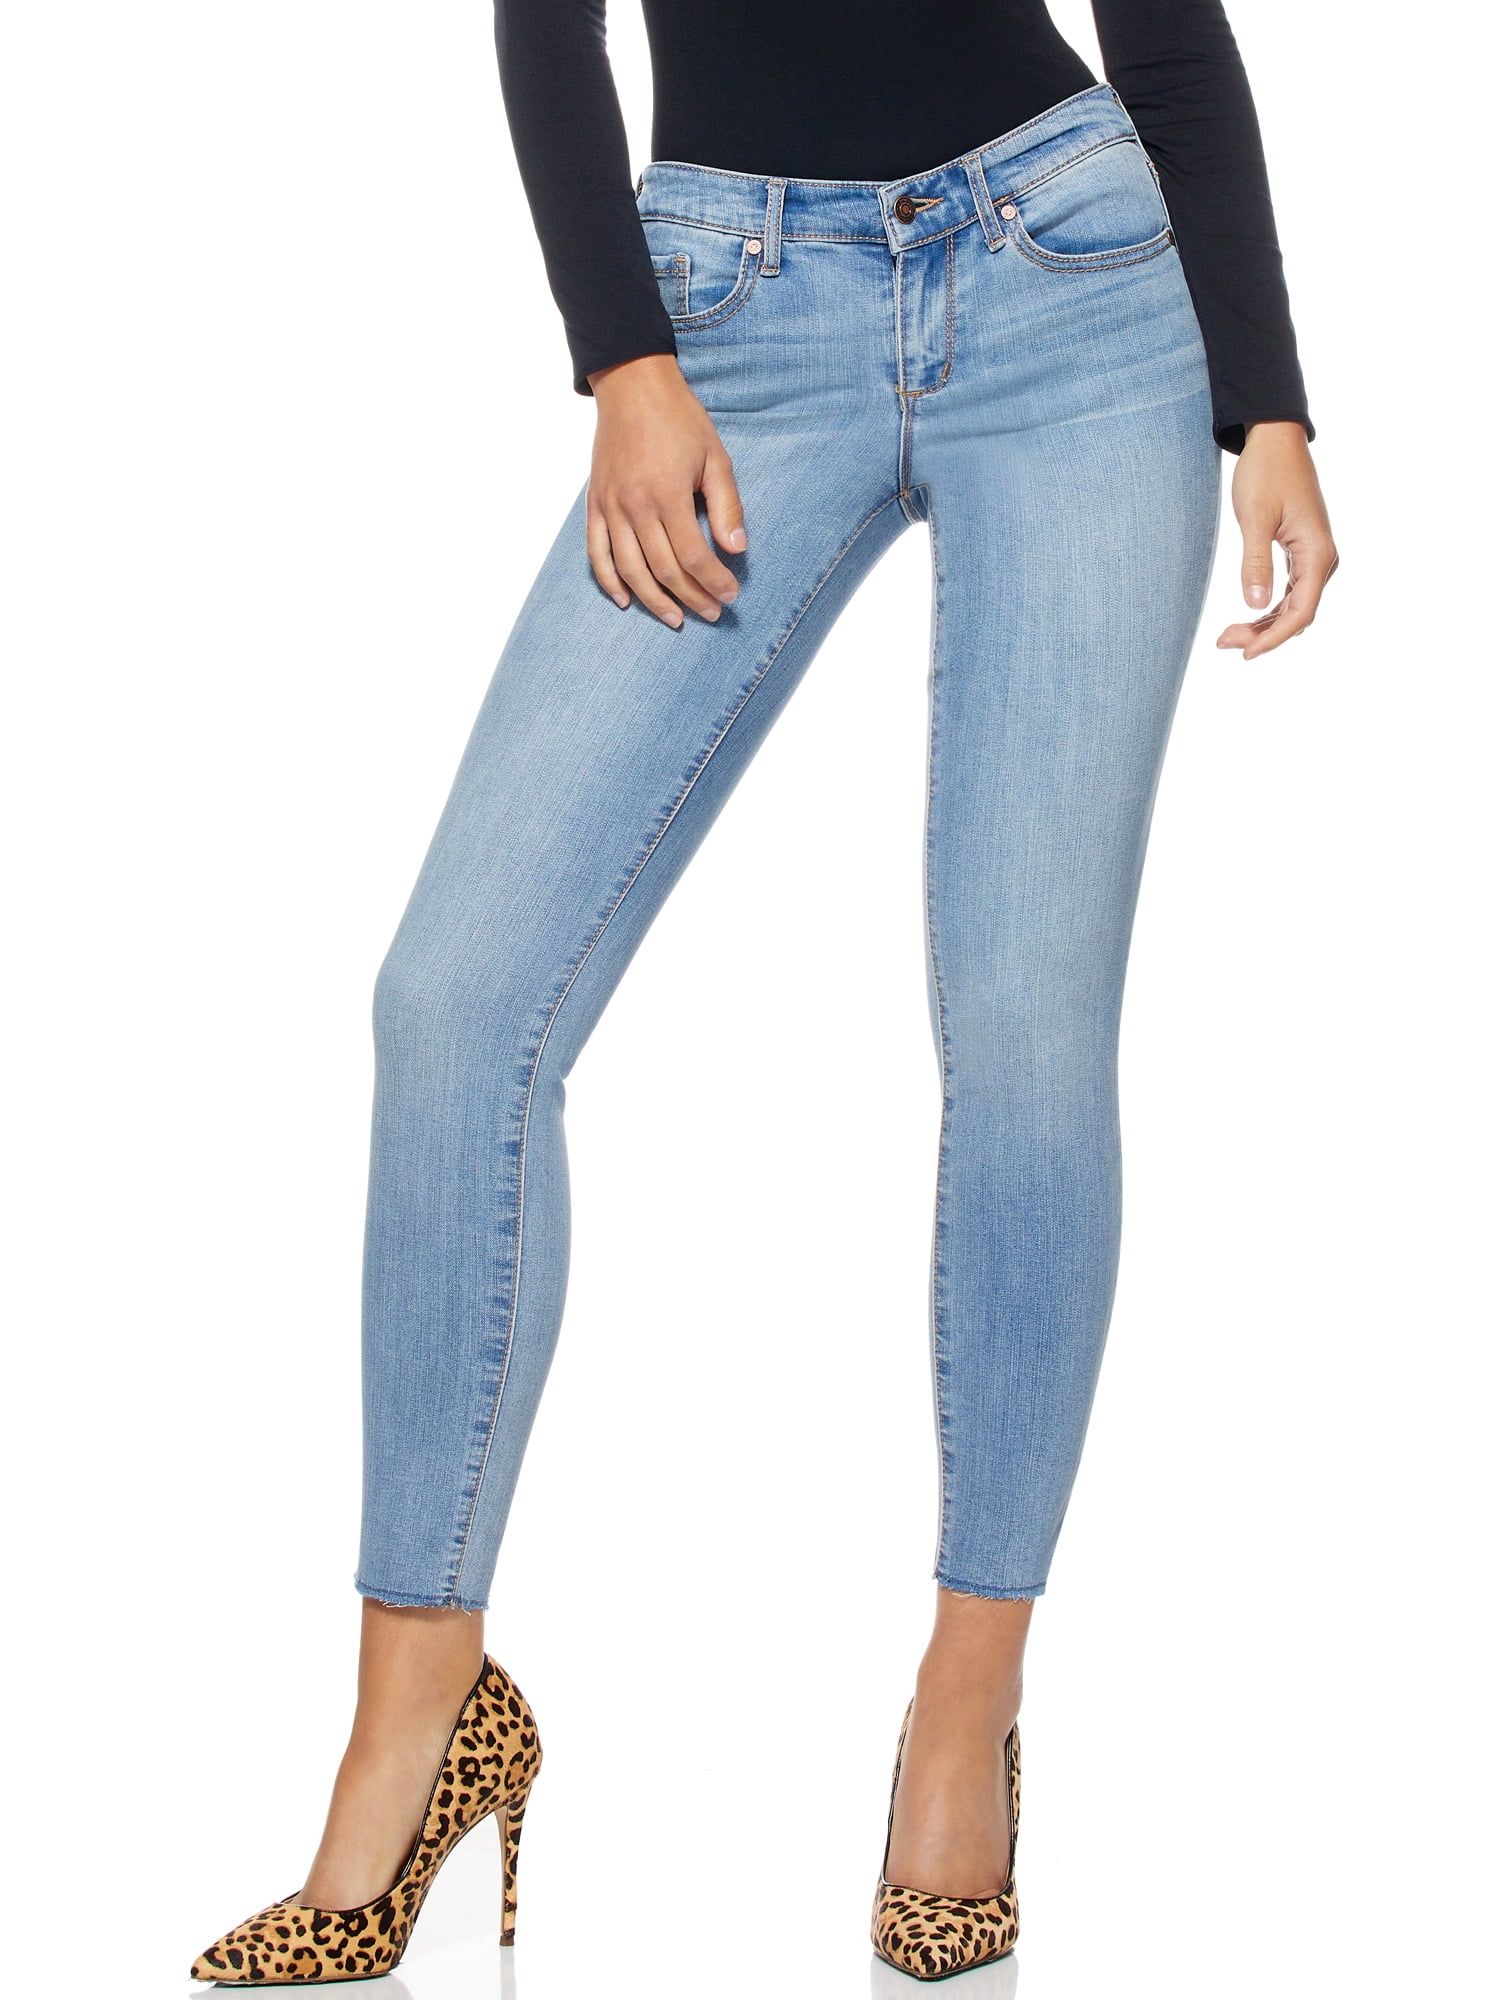 Sofia Jeans by Sofia Vergara Skinny Mid Rise Stretch Ankle Jeans, Regular Inseam - Walmart.com